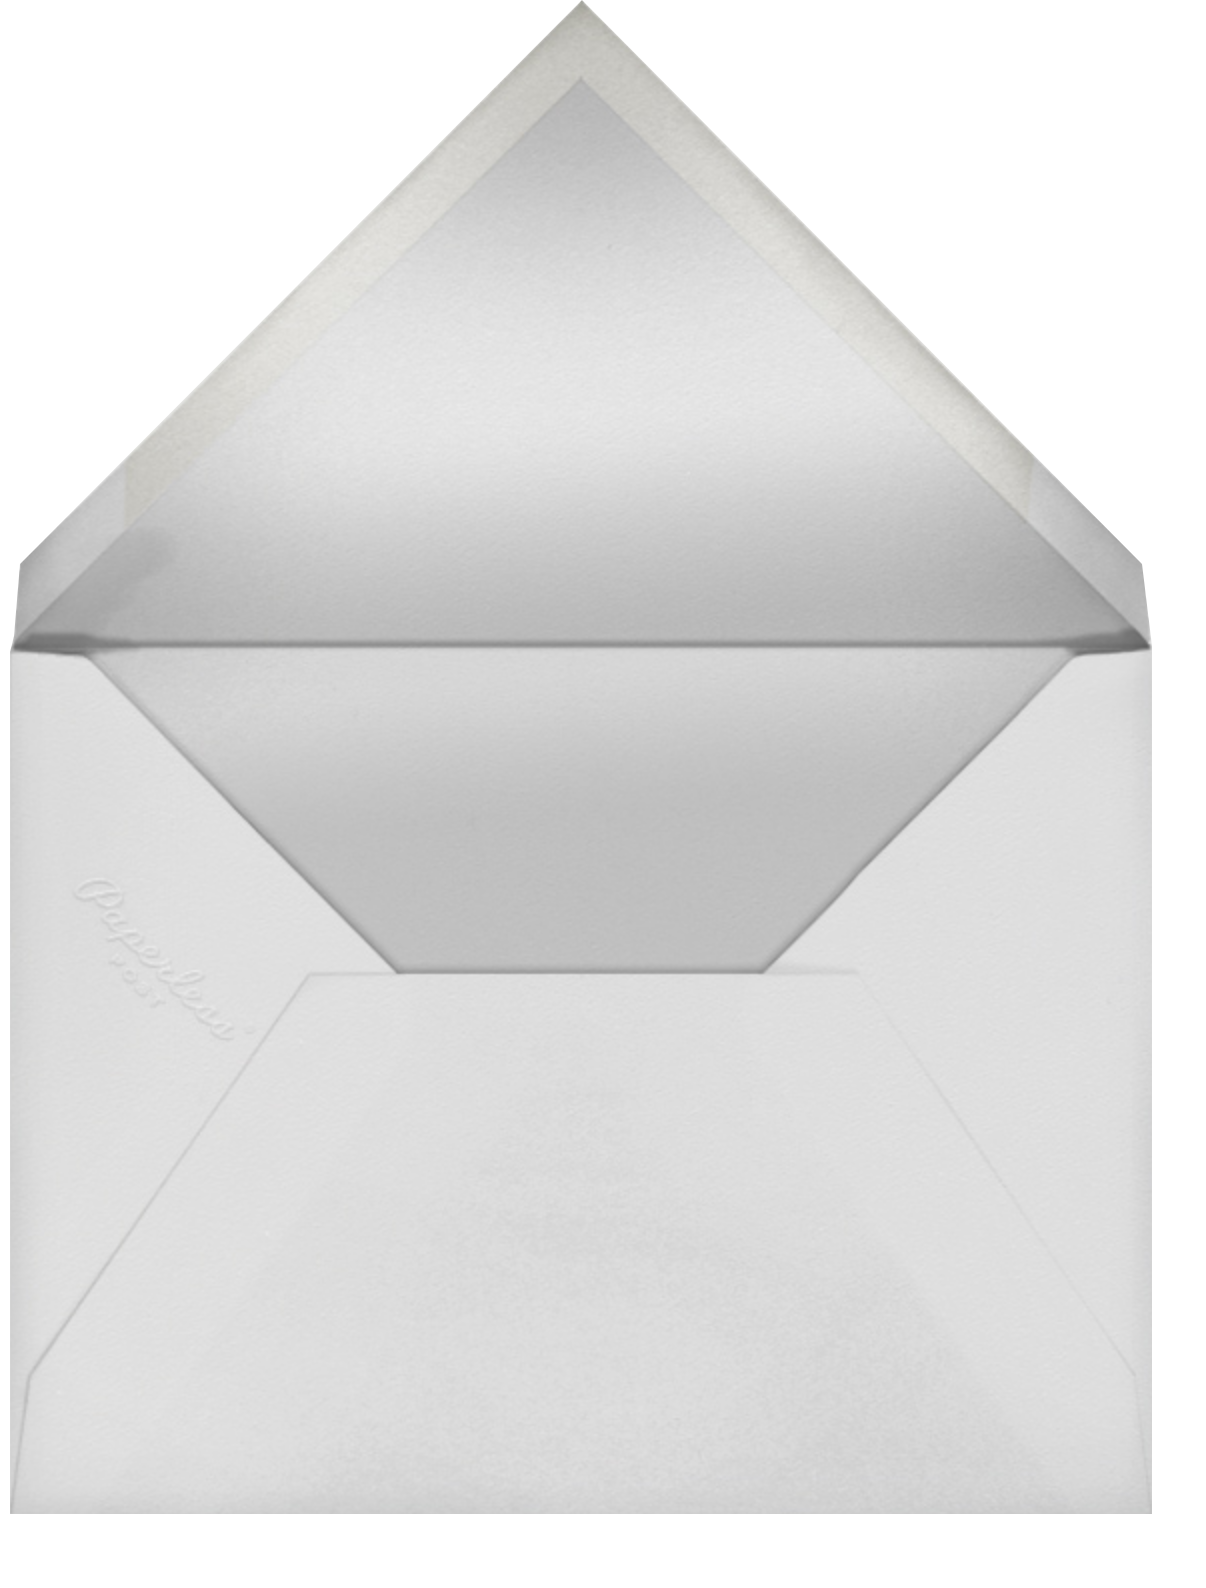 Gradient Edges - Black - Paperless Post - Envelope